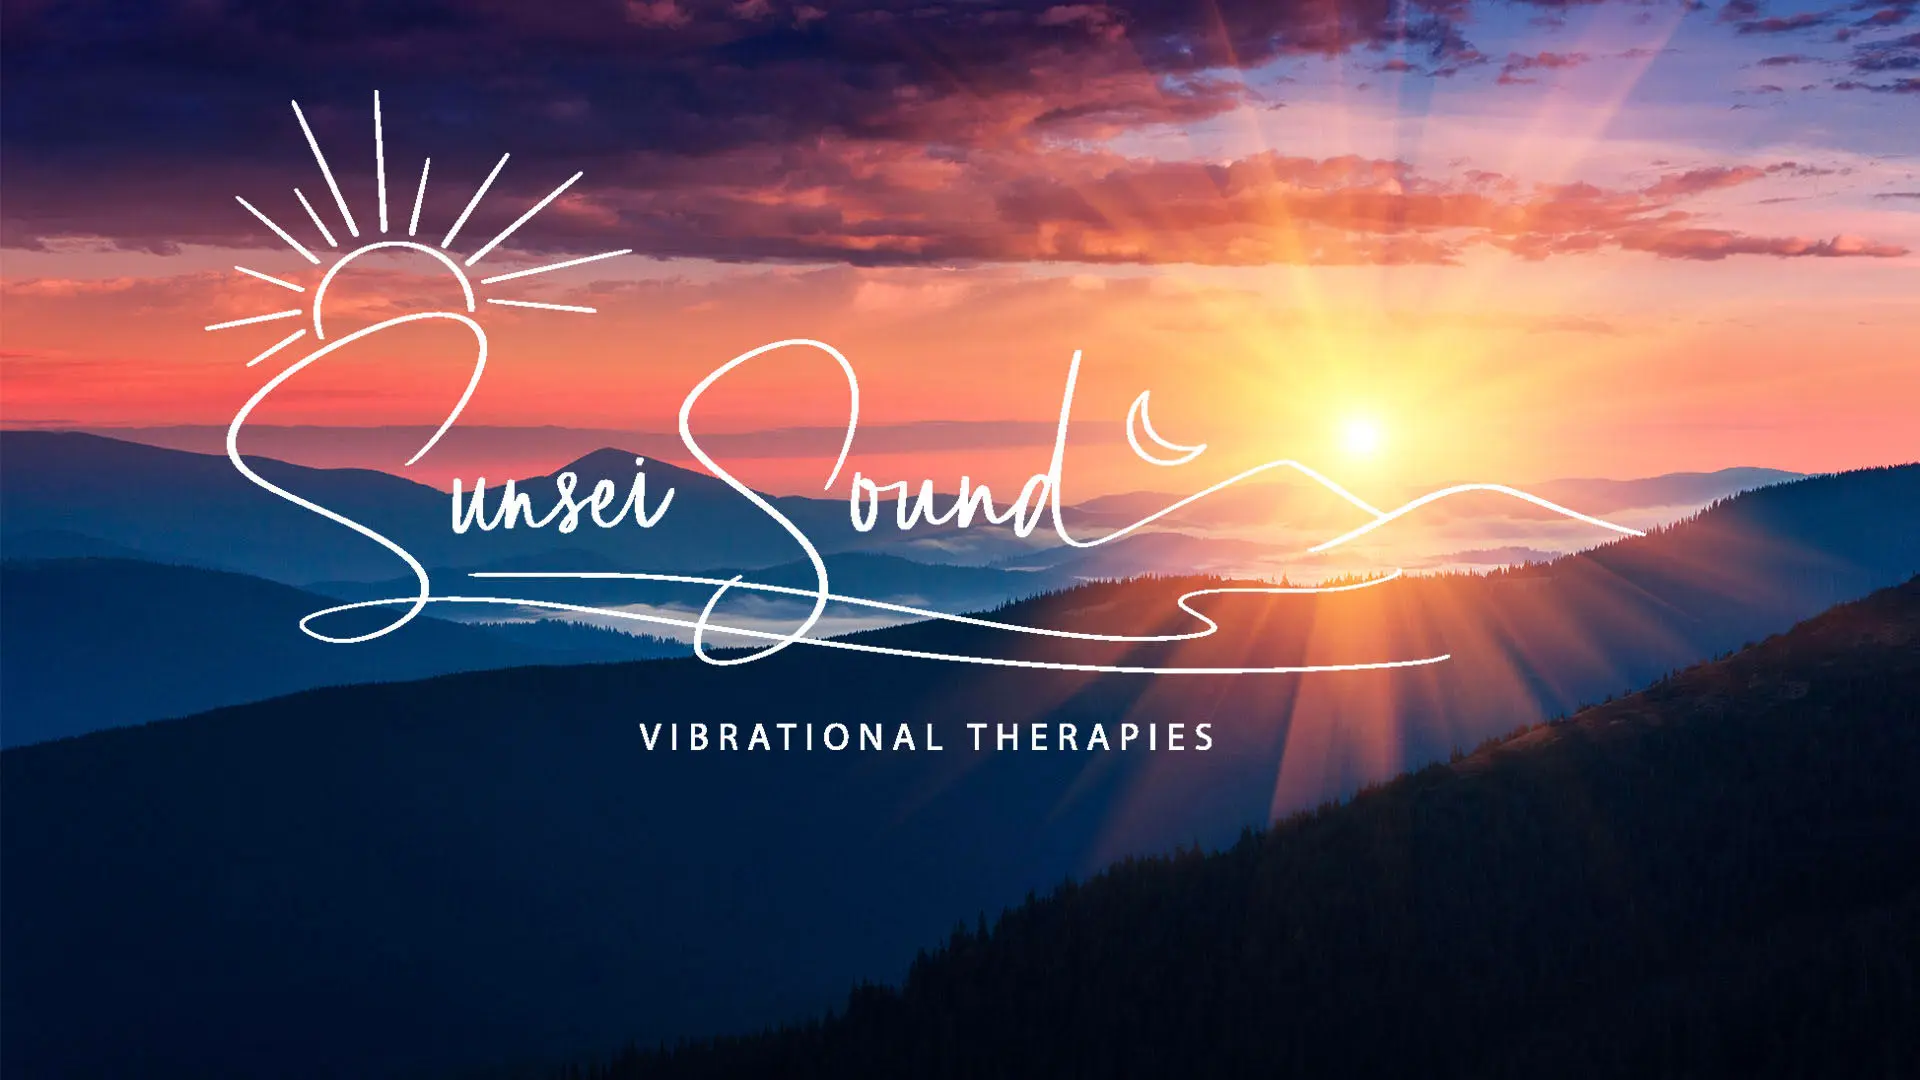 Sunsei Sound Vibrational Therapies Home Page Slider